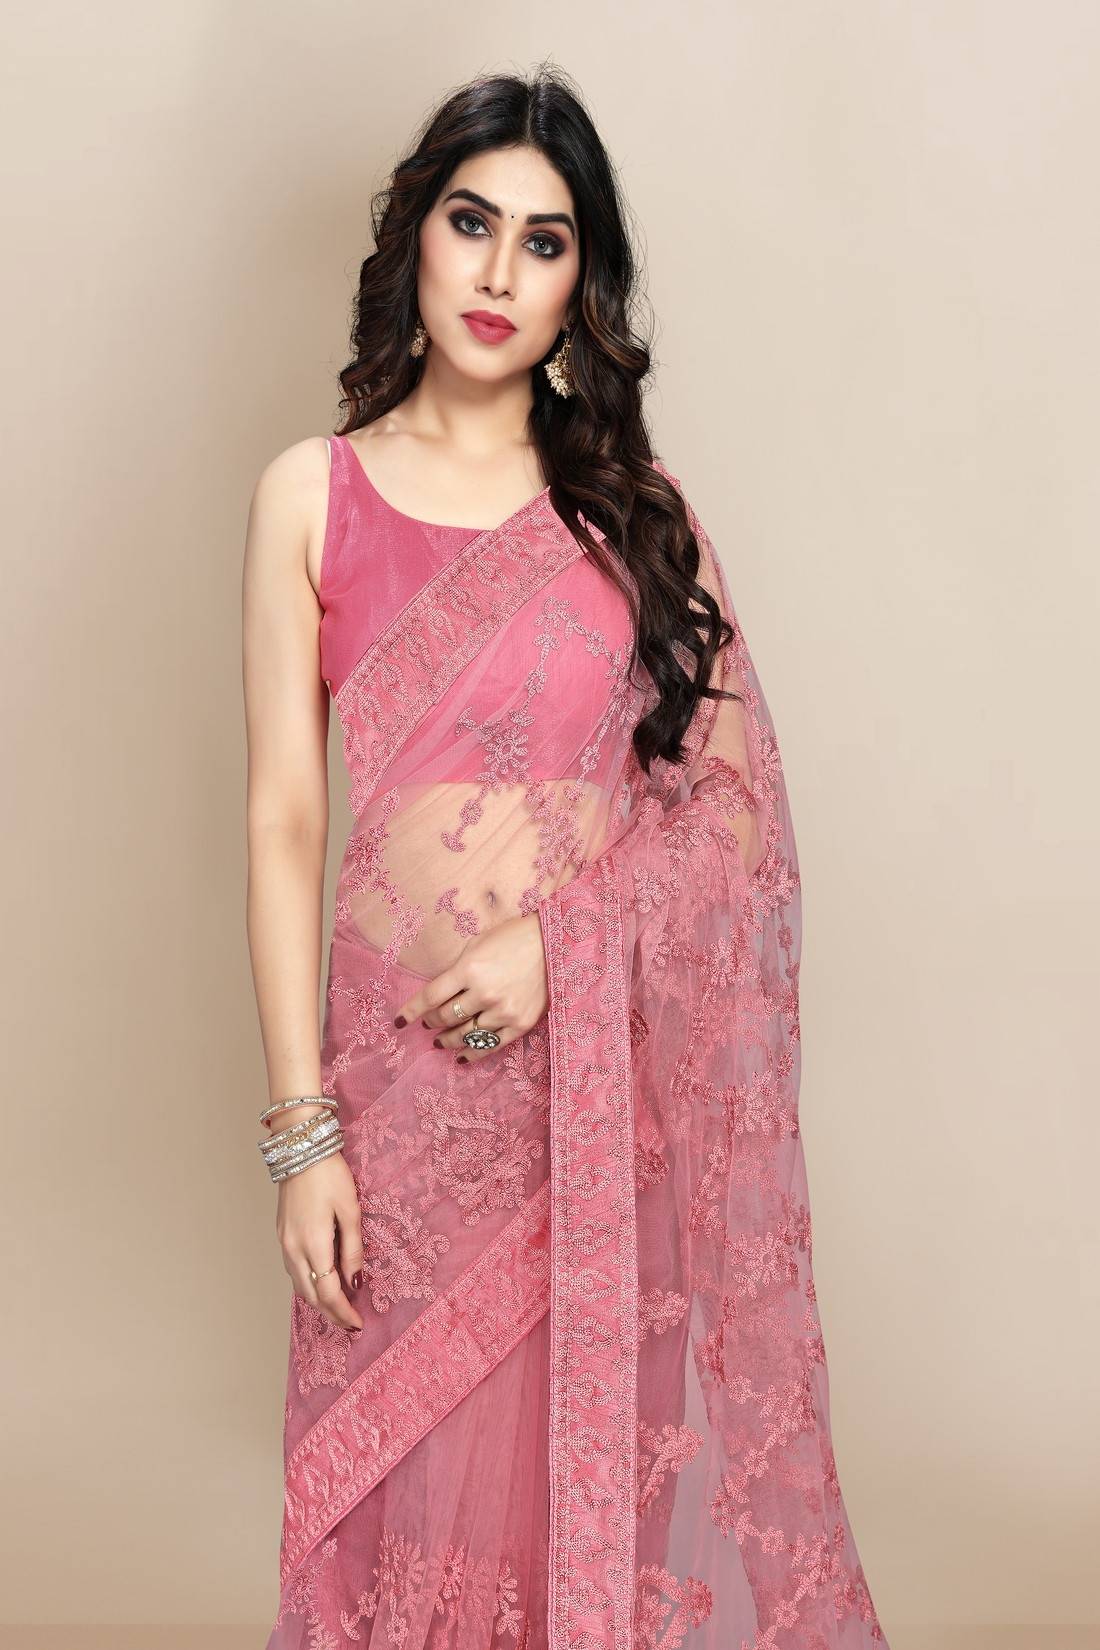 Super Net beautiful Designer embroidery Saree - Pink